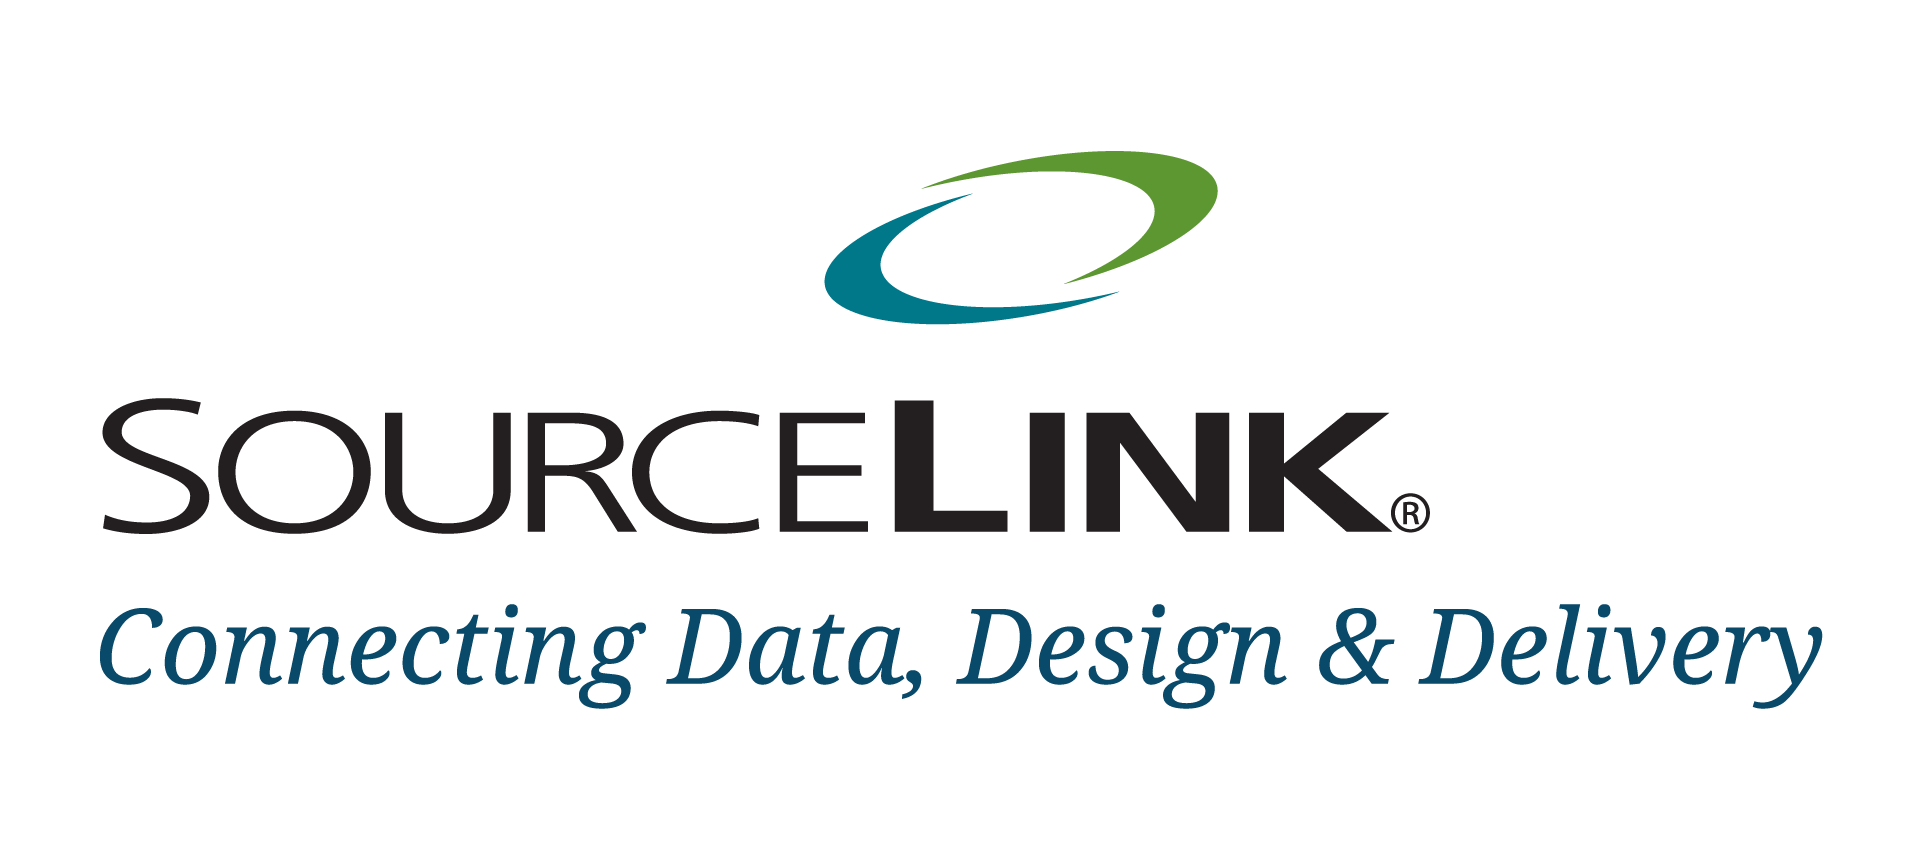 SourceLink Presents Webinar on Banking Trends and